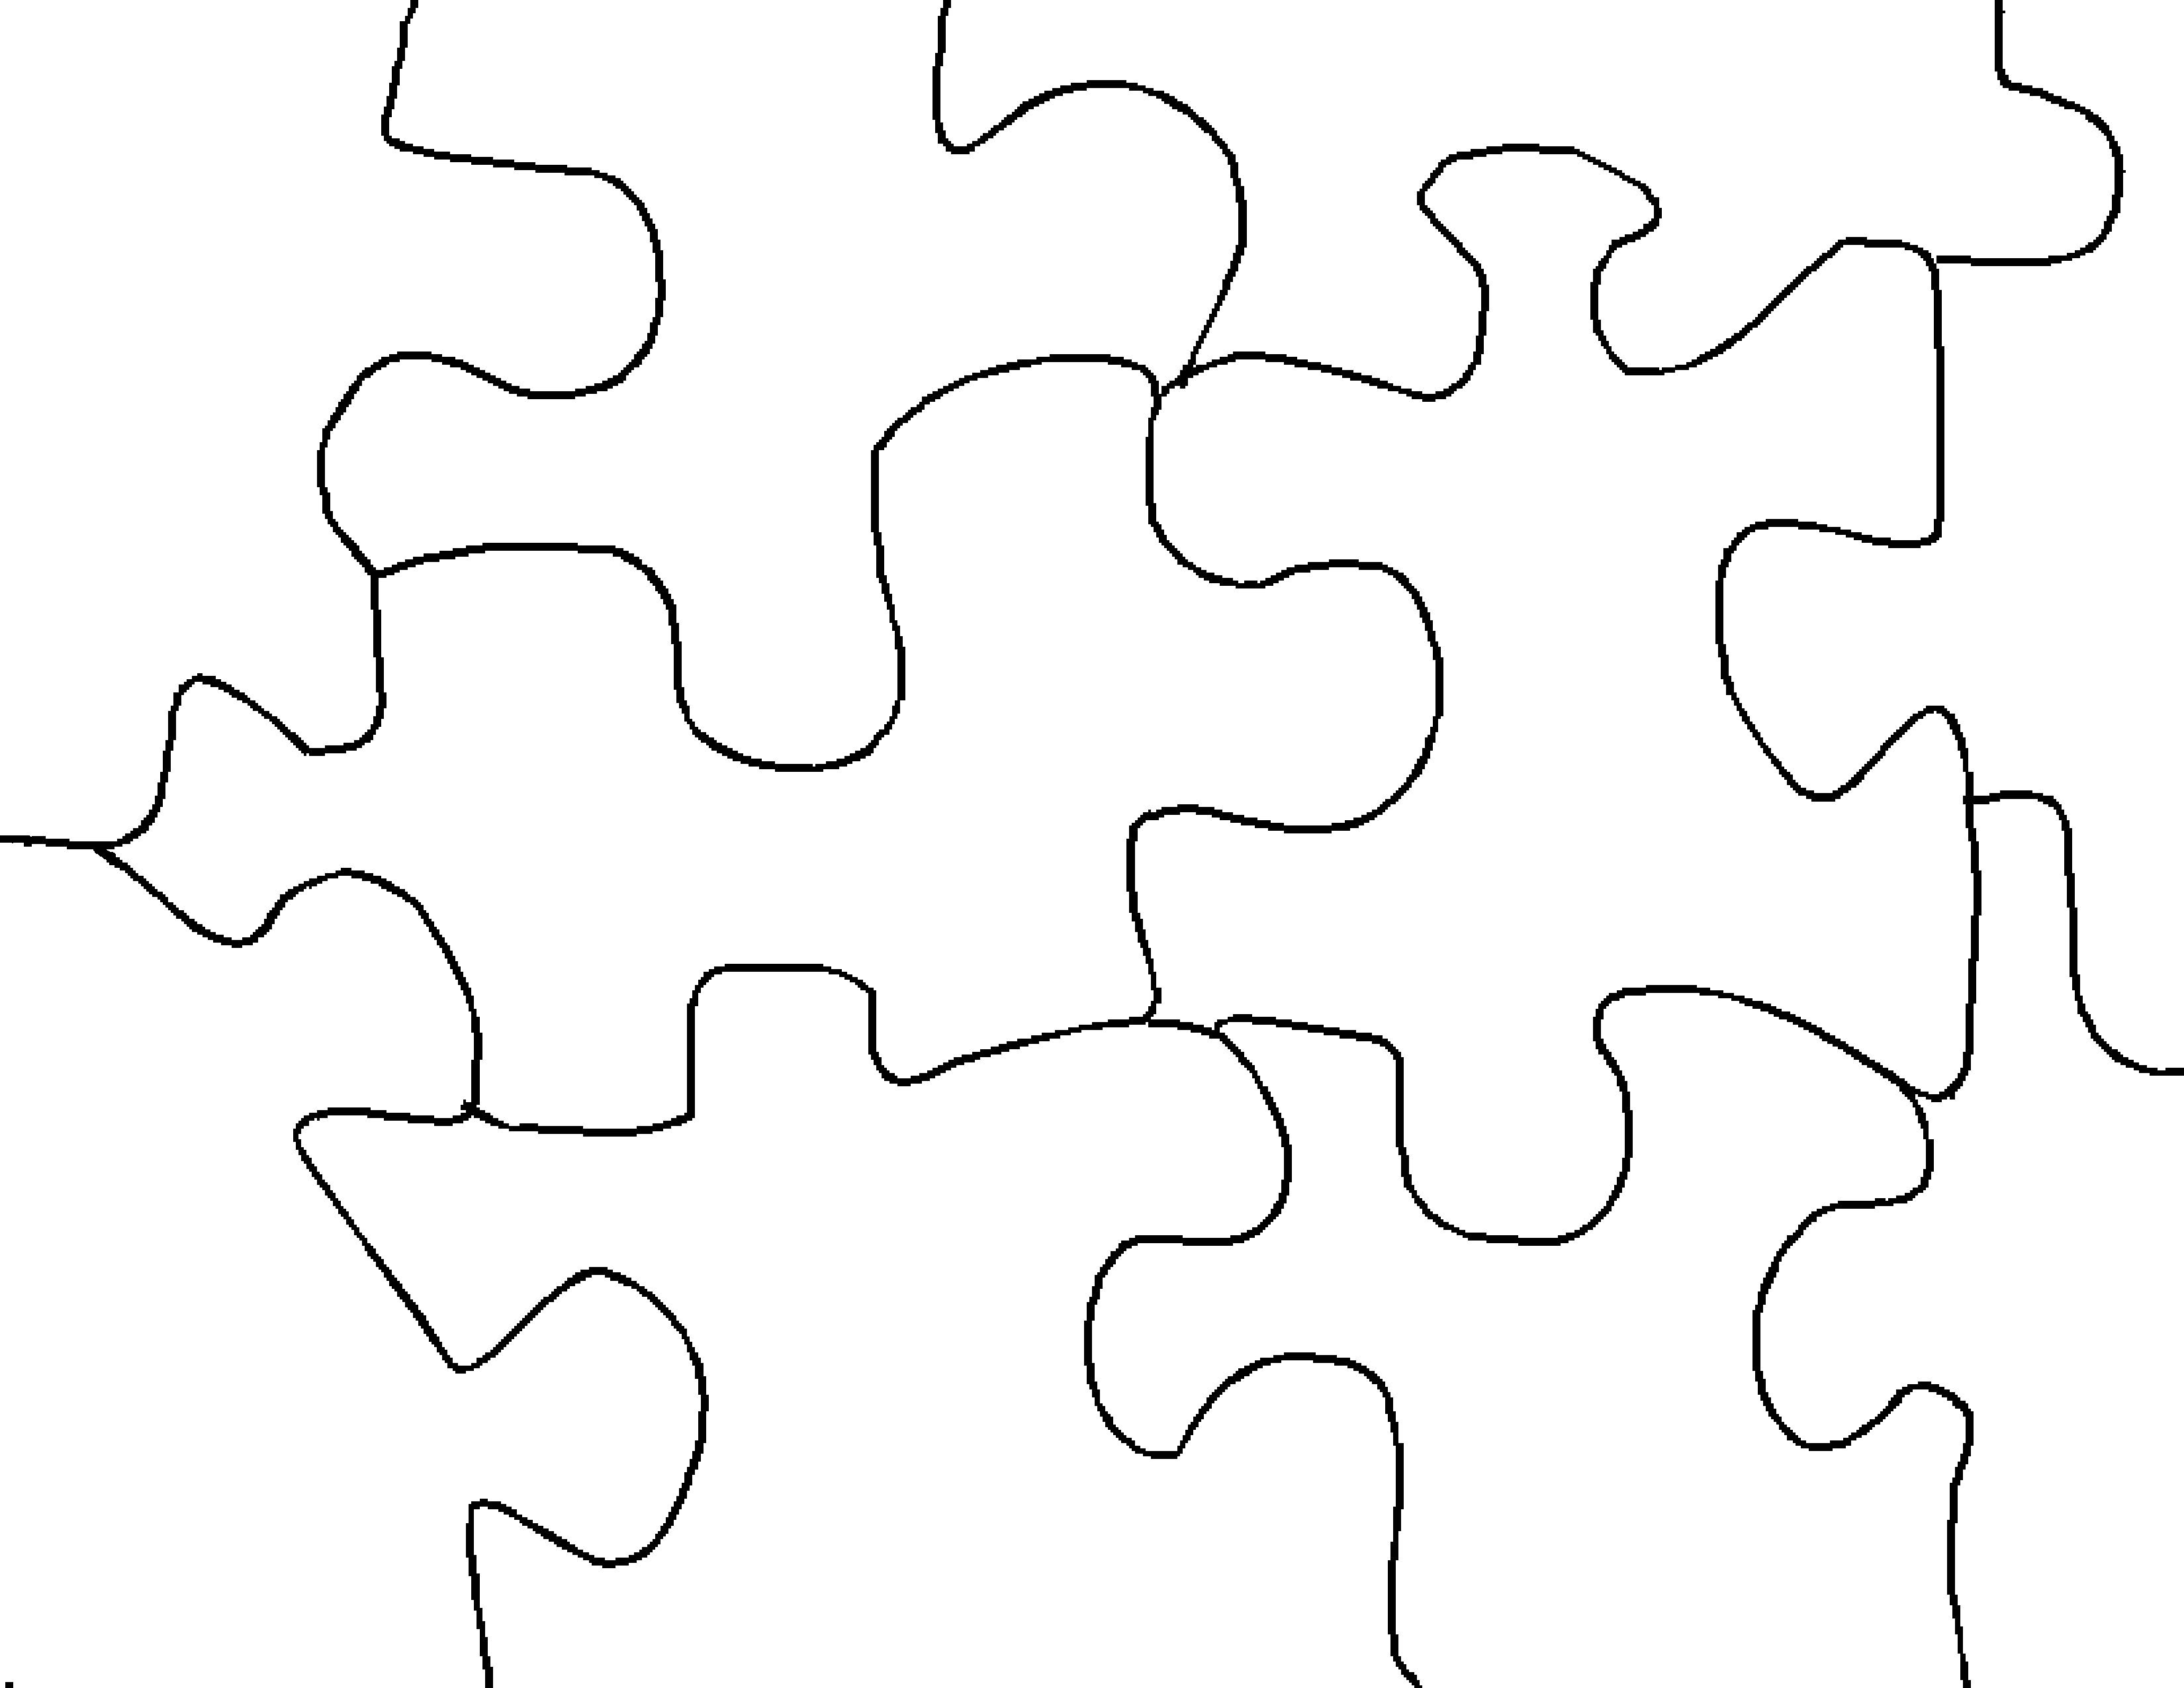 Make Jigsaw Puzzle - 8 Piece Puzzle Printable